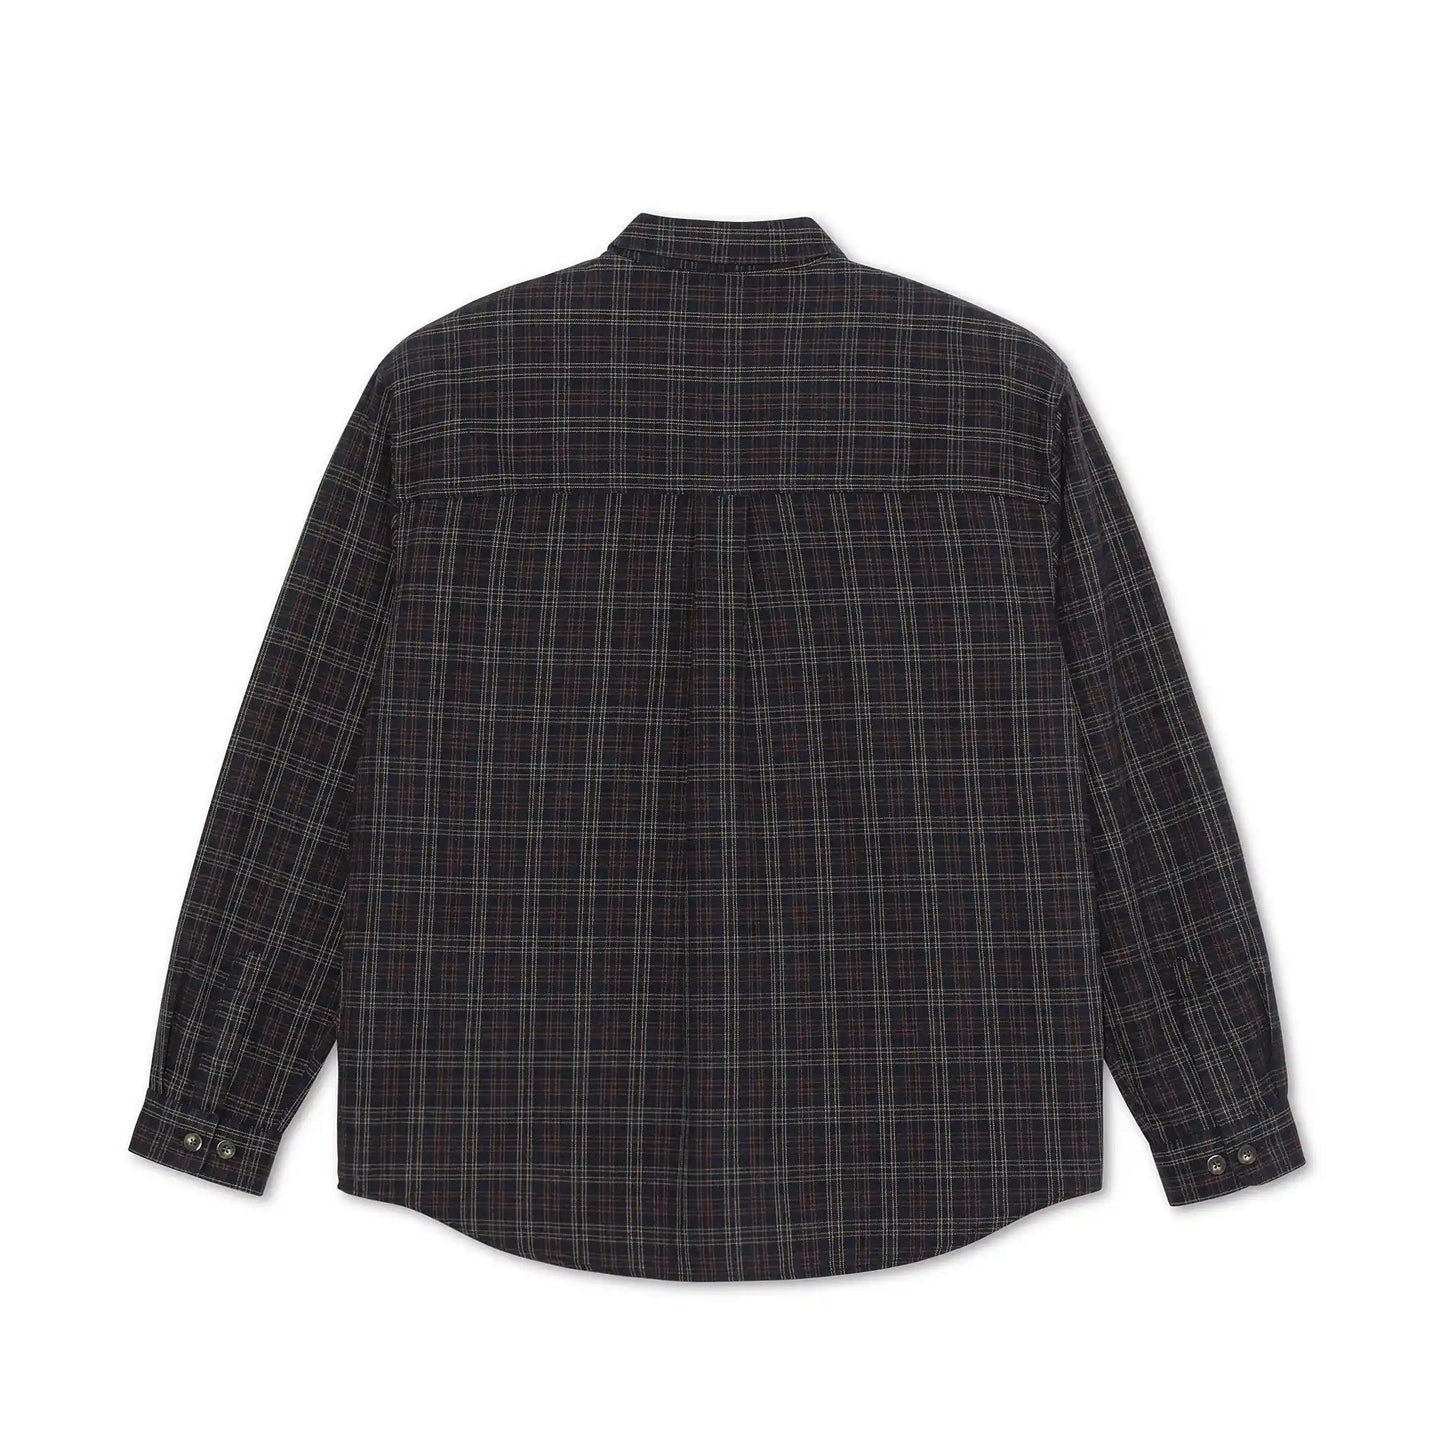 Polar Mitchell Long Sleeve Shirt Flannel, navy / brown - Tiki Room Skateboards - 2